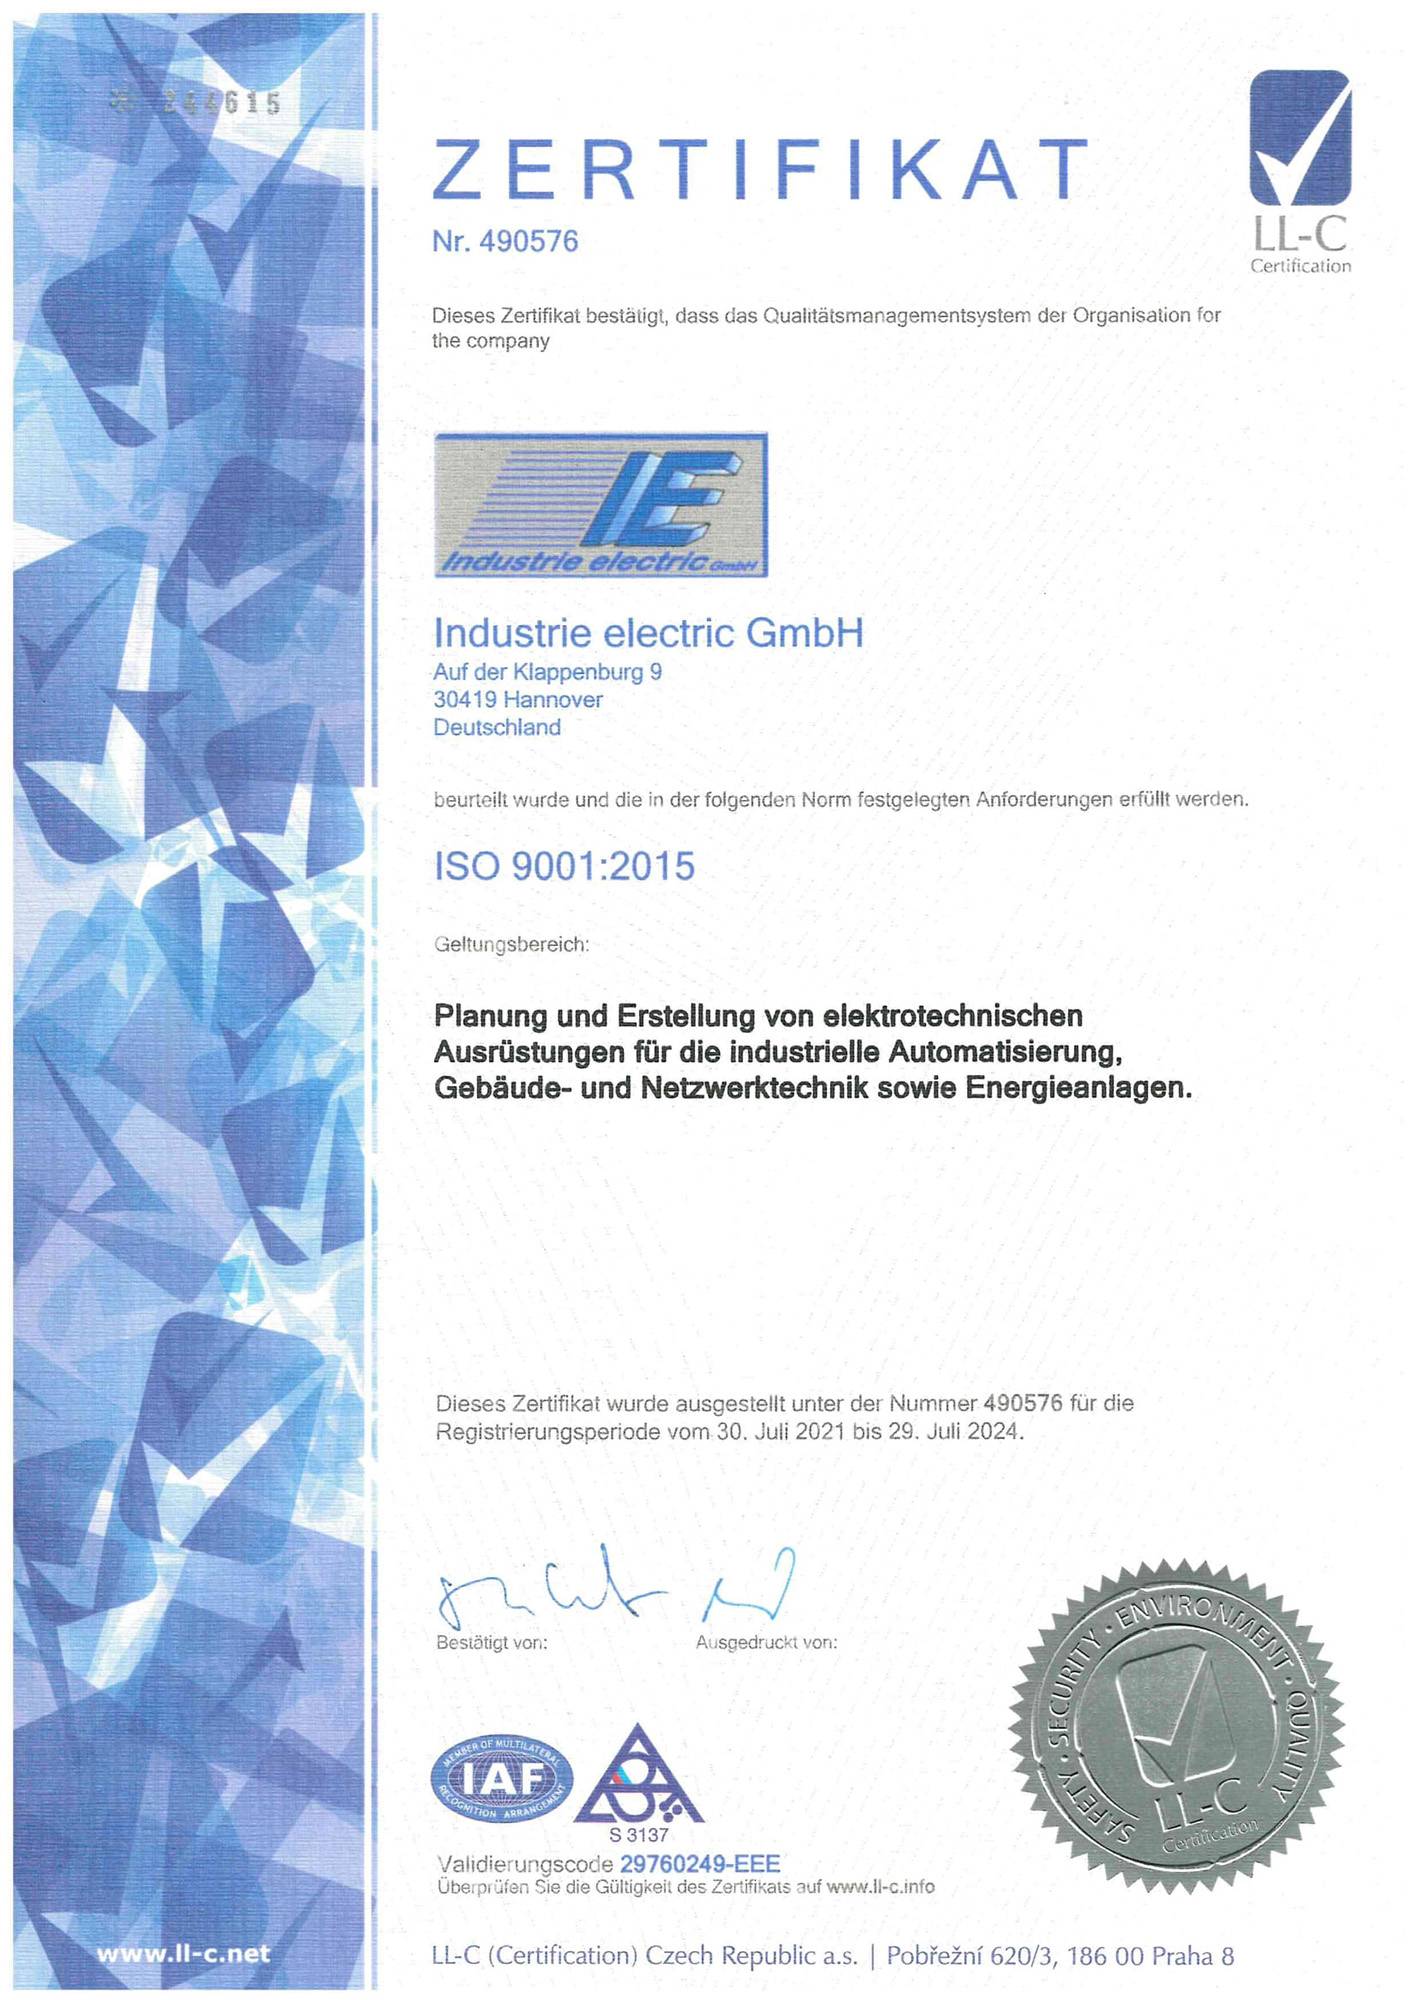 zertifikat_0003_Zertifikat ISO 9001-2015 Qualitätsmanagementsystem der Organisation-1